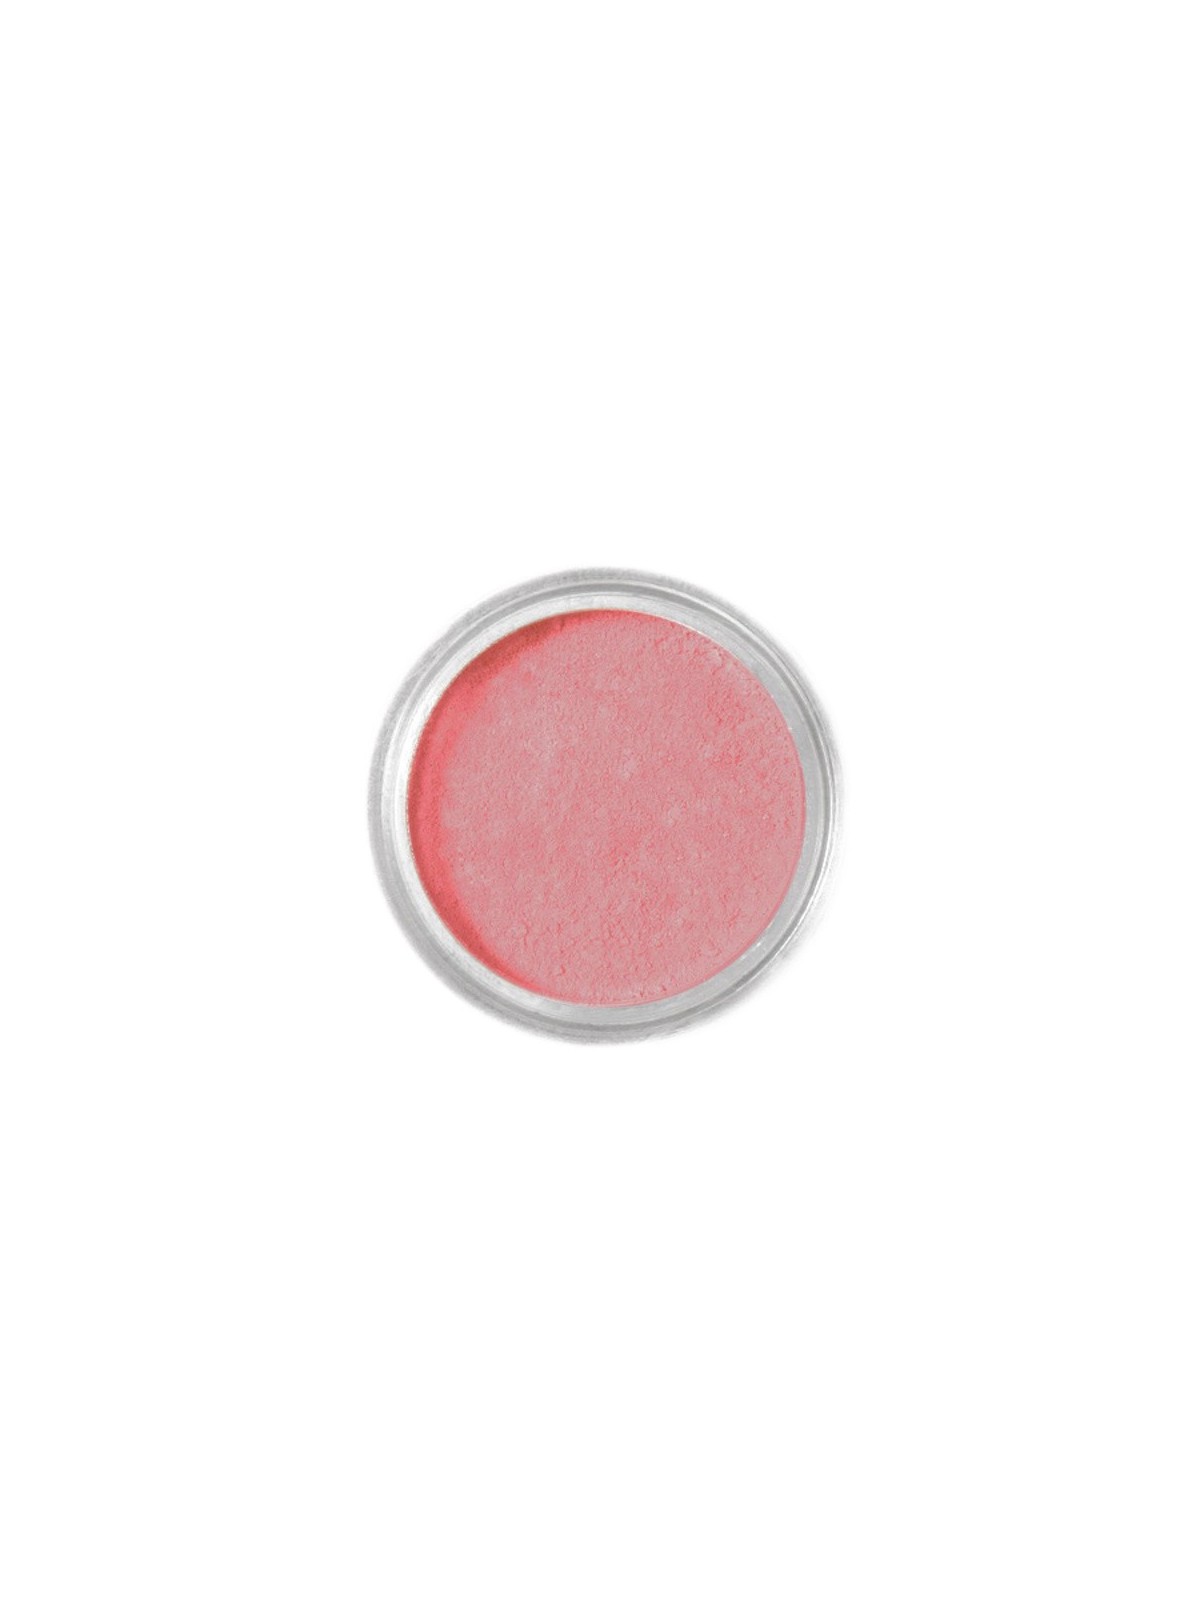 Jedlá prachová farba Fractal - Kitty Nose Pink, Macskaorr rózsaszín (3 g)